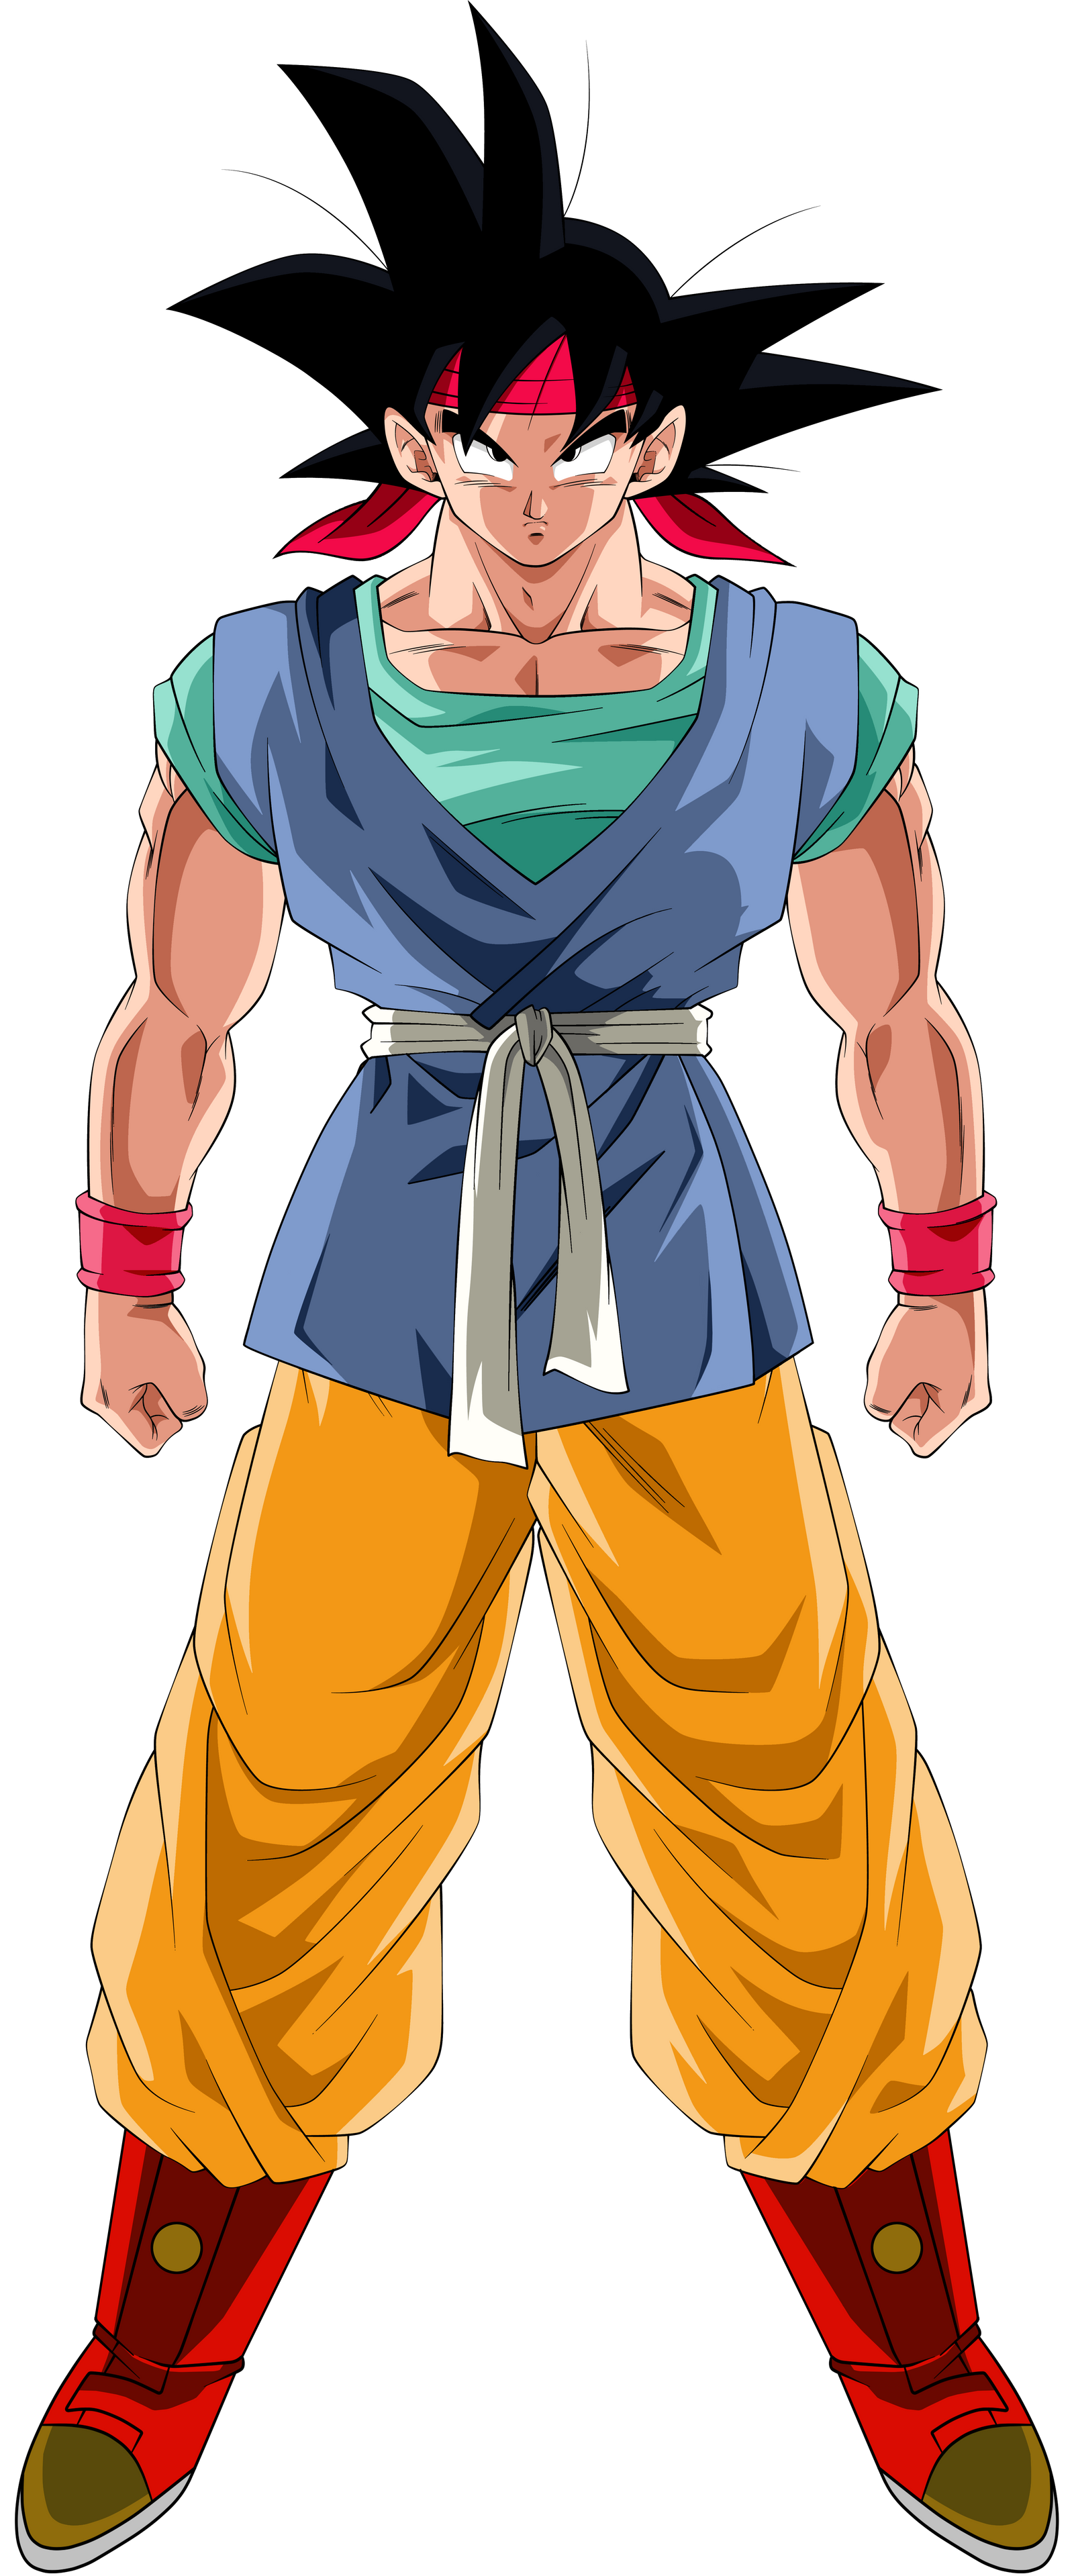 Goku Super Saiyan 4 DBS Colors by obsolete00 on DeviantArt